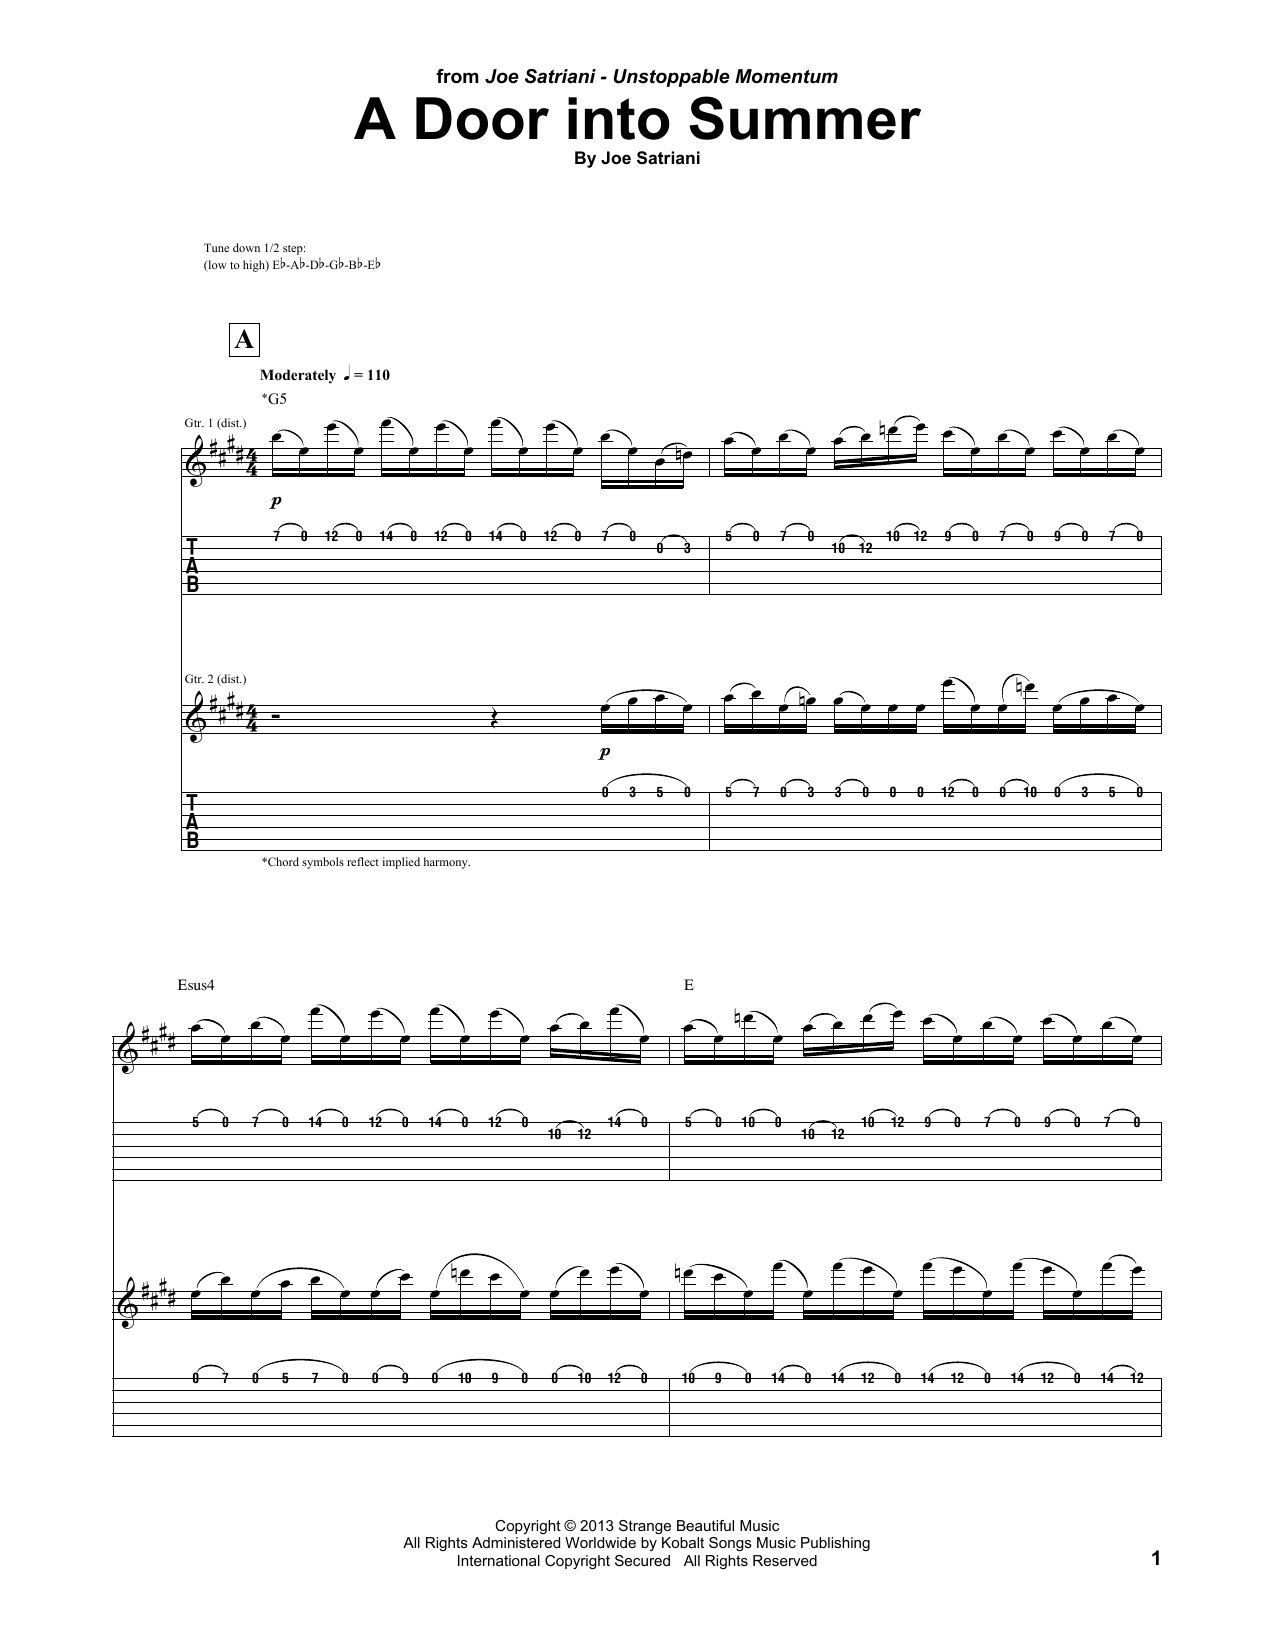 Joe Satriani A Door Into Summer Sheet Music Notes & Chords for Guitar Tab - Download or Print PDF